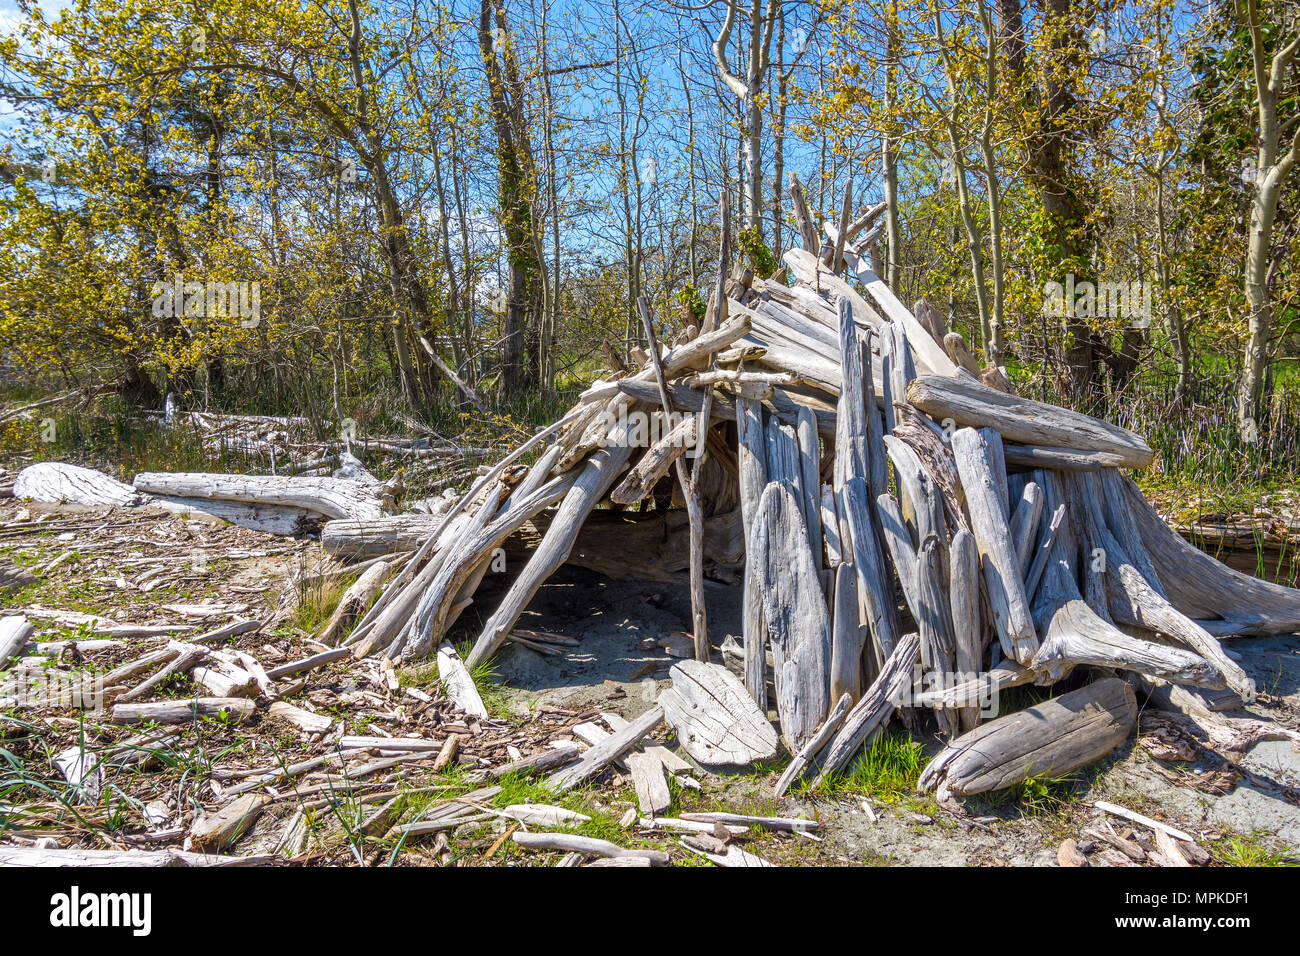 Beach hut built from flotsam timbers - Hornby Island, BC, Canada. Stock Photo